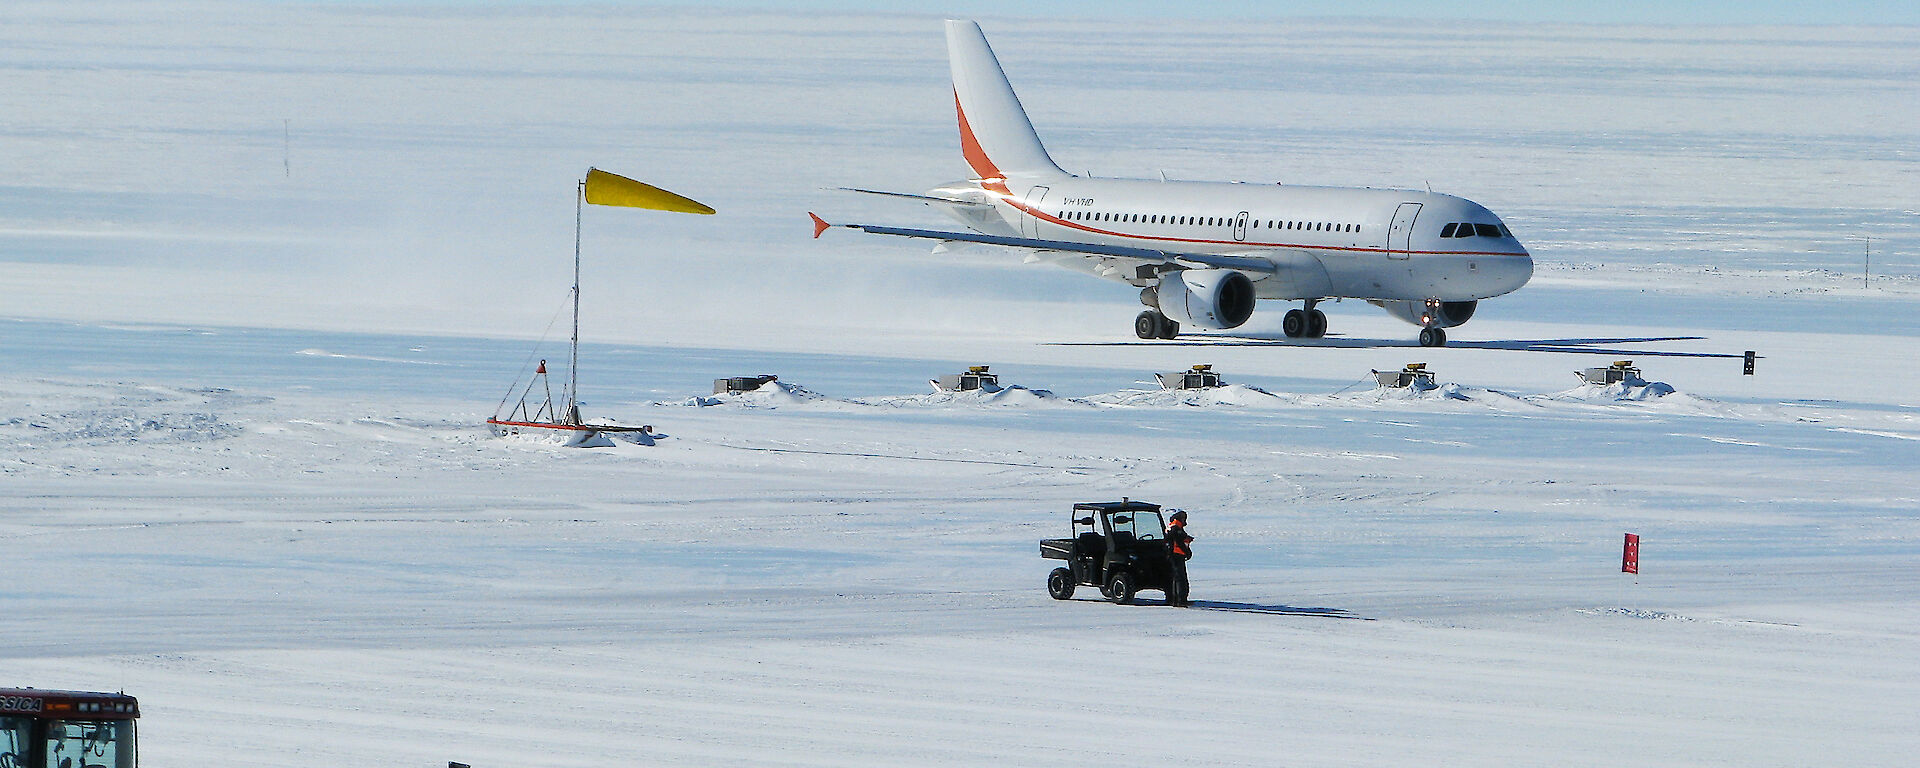 Wilkins ice runway